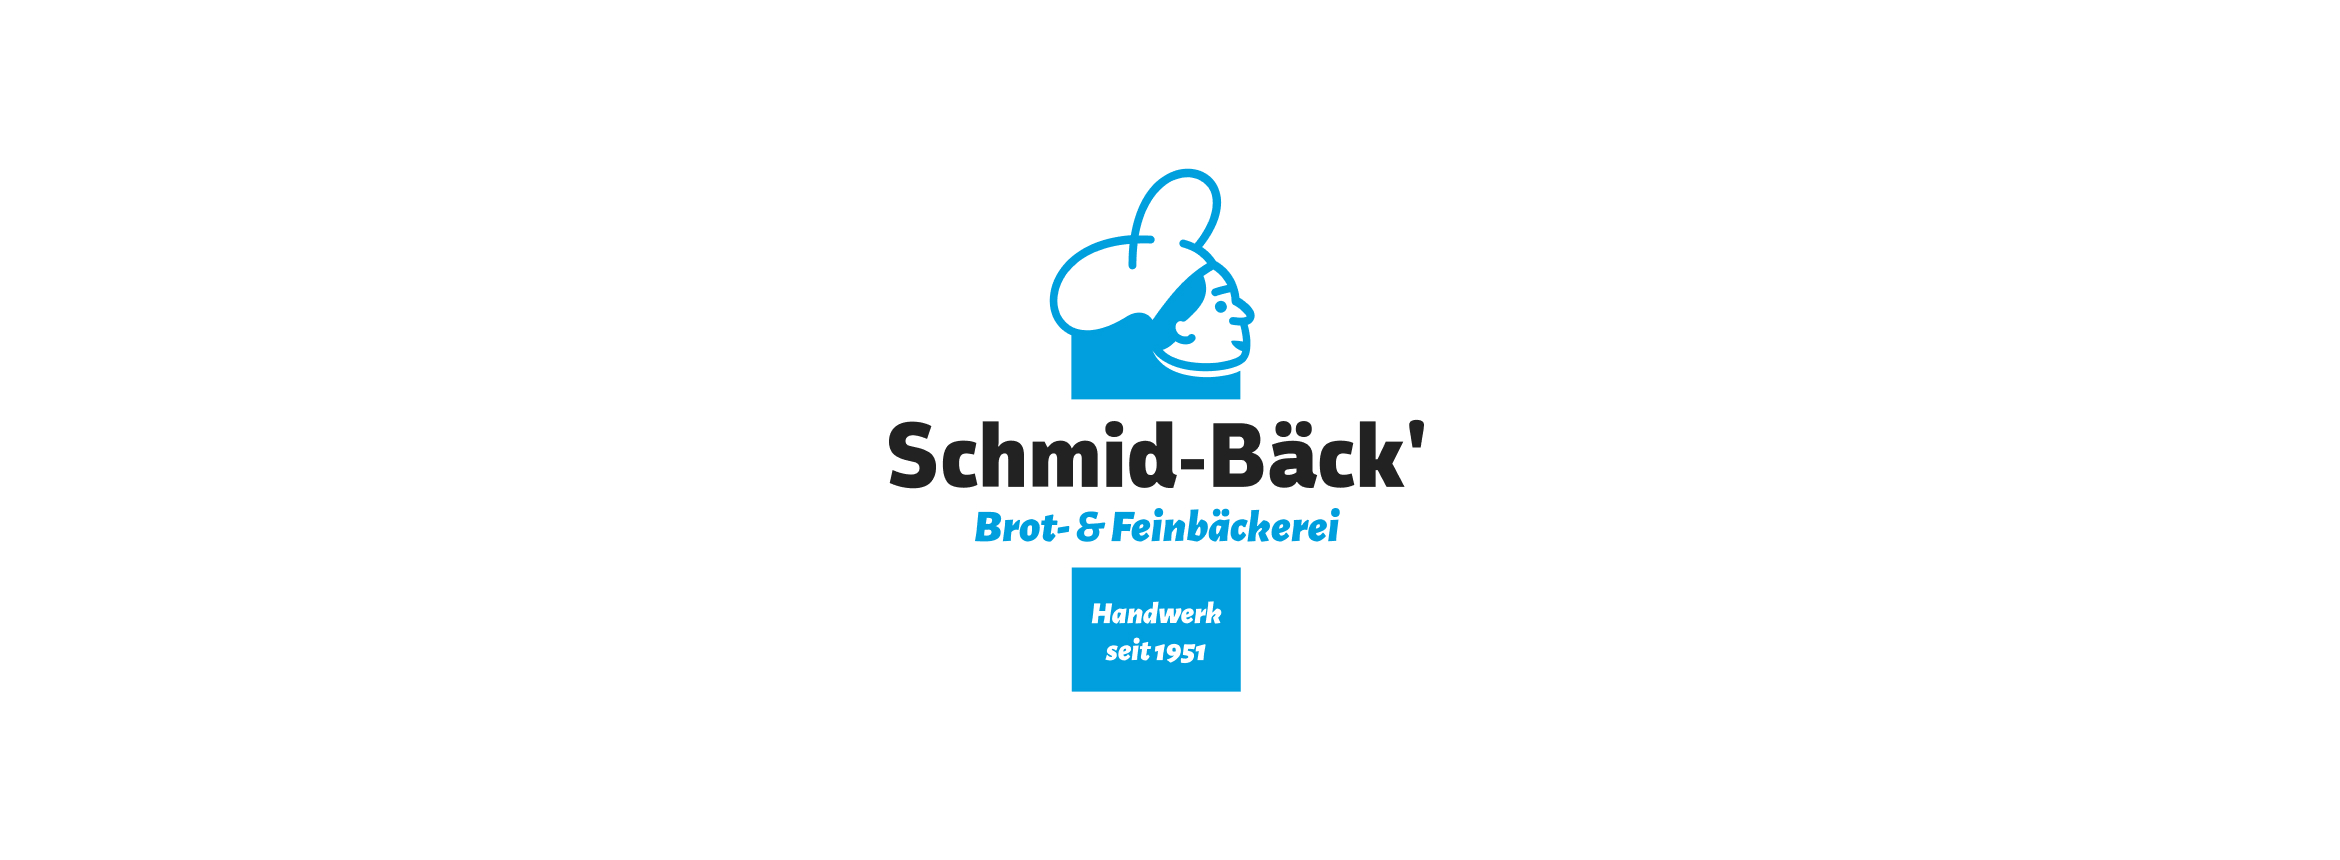 schmid-baeck-1